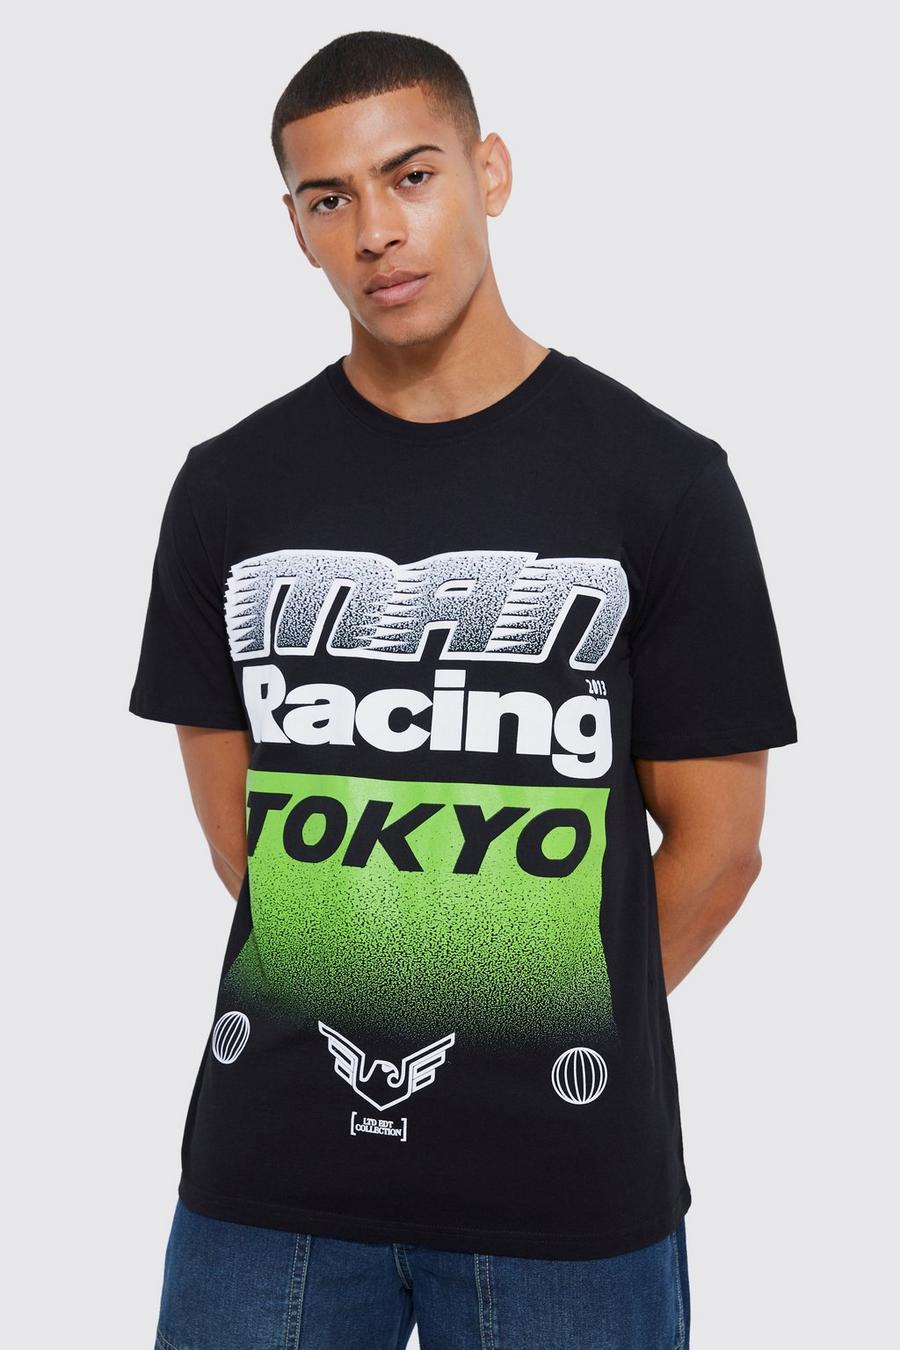 T-Shirt mit Tokyo Moto Racing Print, Black